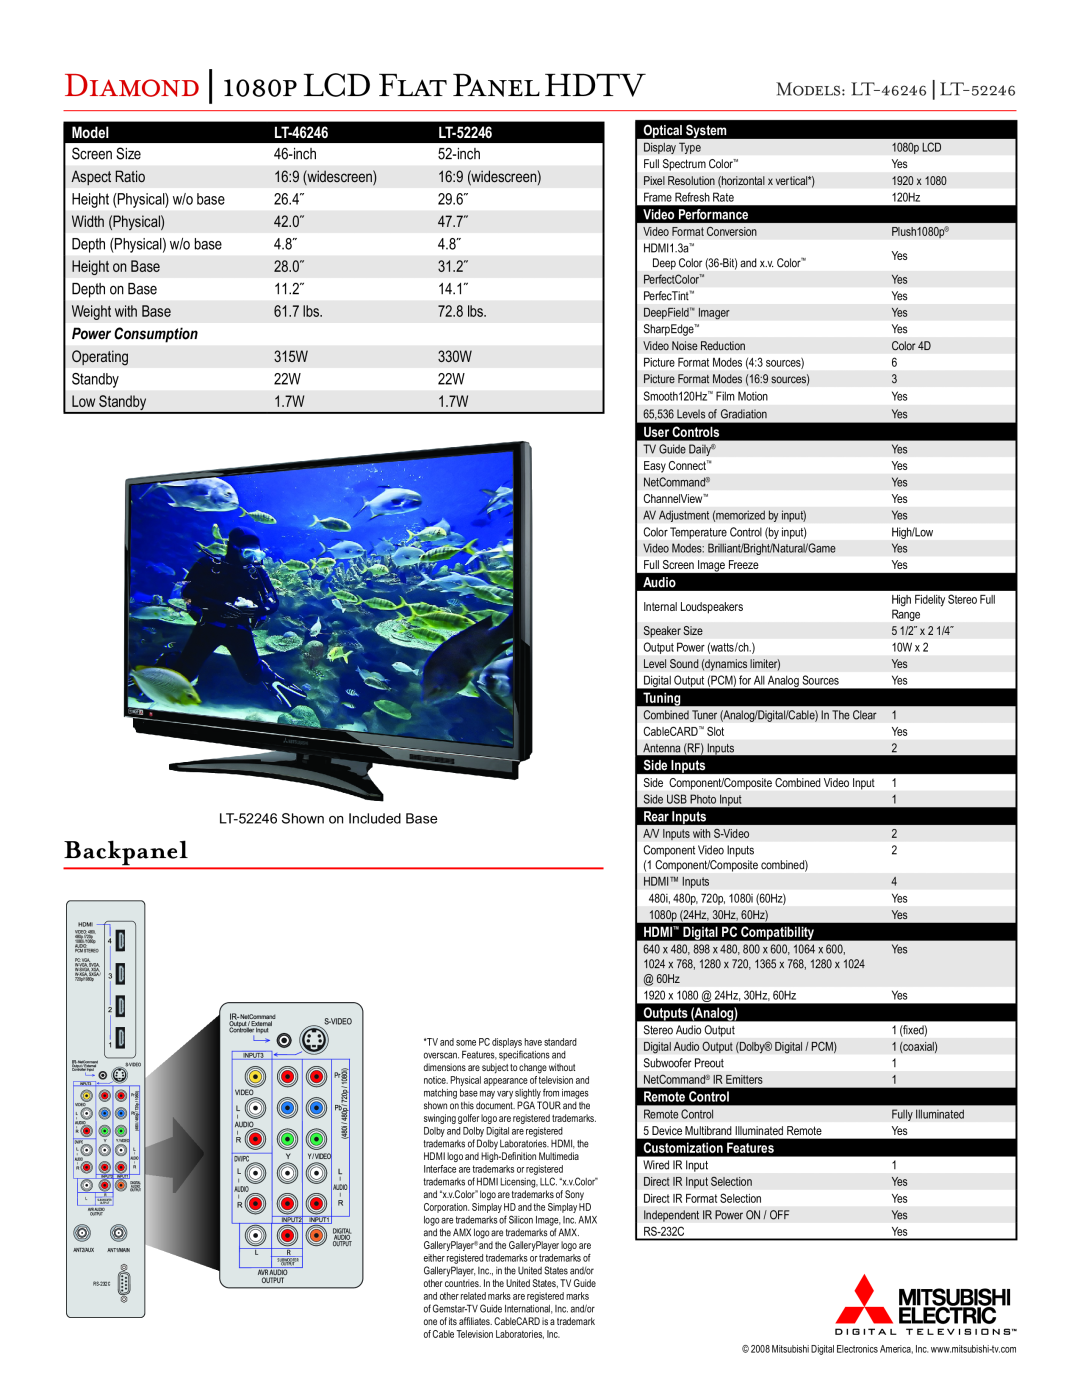 Mitsubishi 1080P manual Backpanel, Diamond 1080p LCD Flat Panel HDTV, Models LT-46246 LT-52246, Power Consumption 